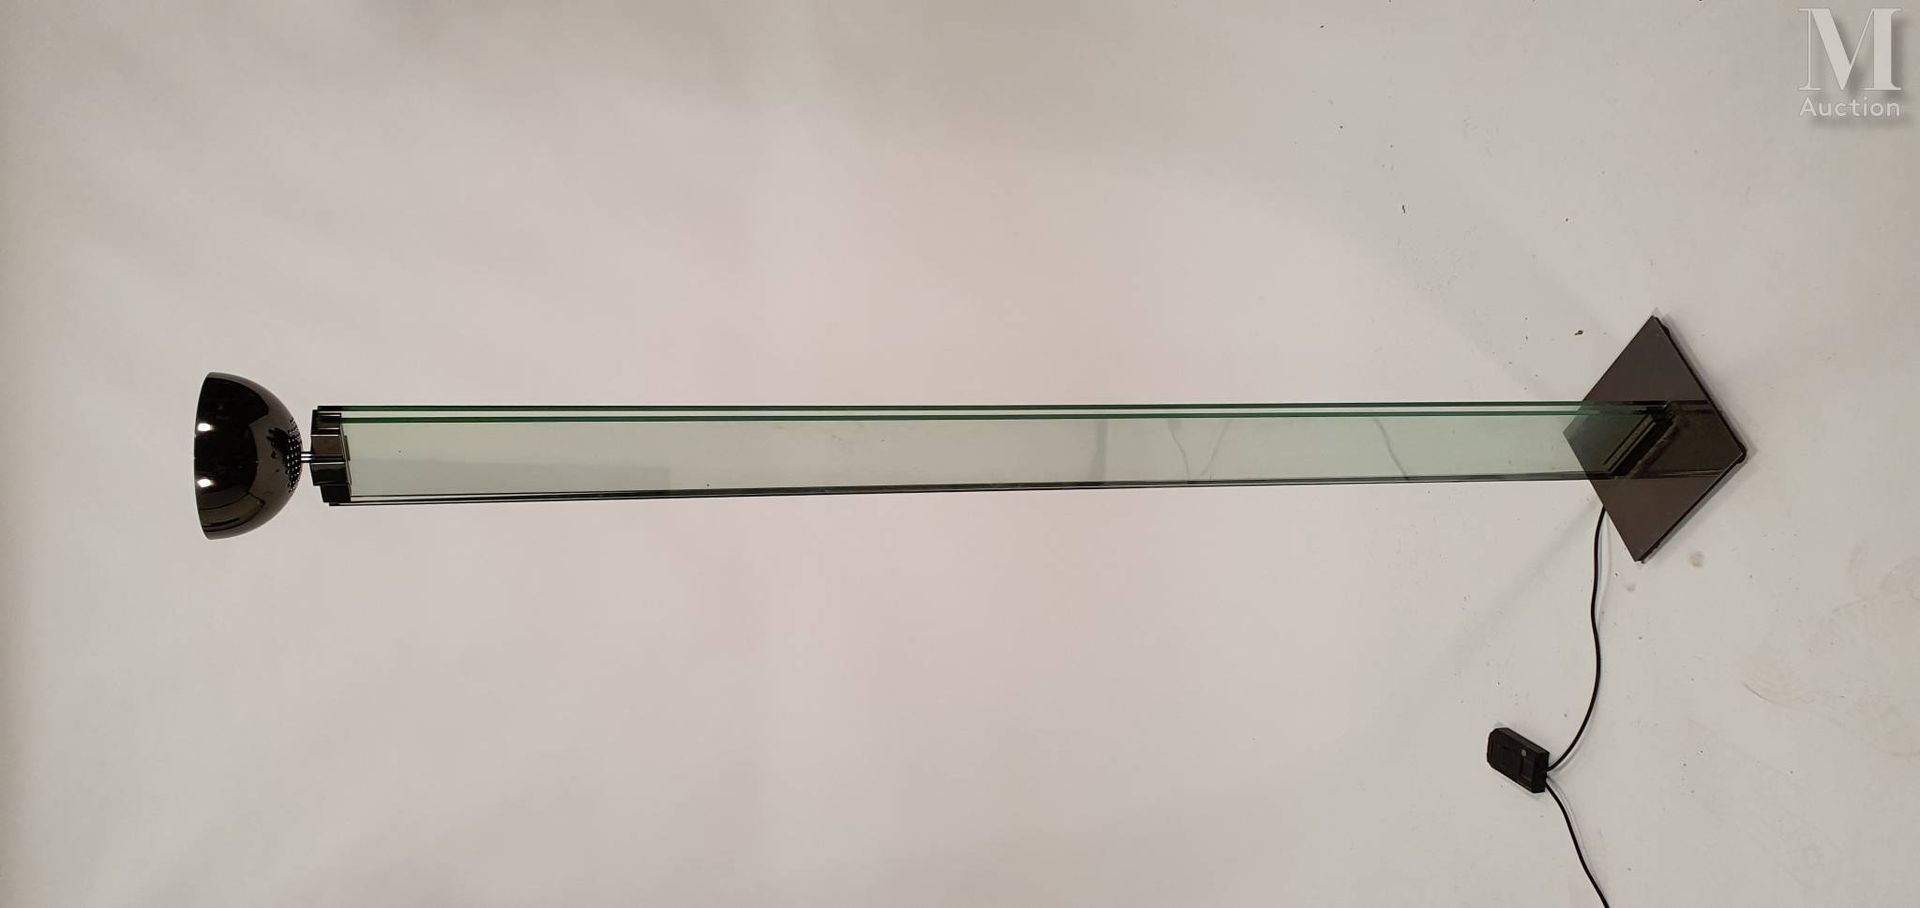 TRAVAIL ITALIEN 落地灯，灯杆由两根有色玻璃条组成。四角形的镀铬金属底座和带镜面效果的漆面金属反射器。

身高：189厘米